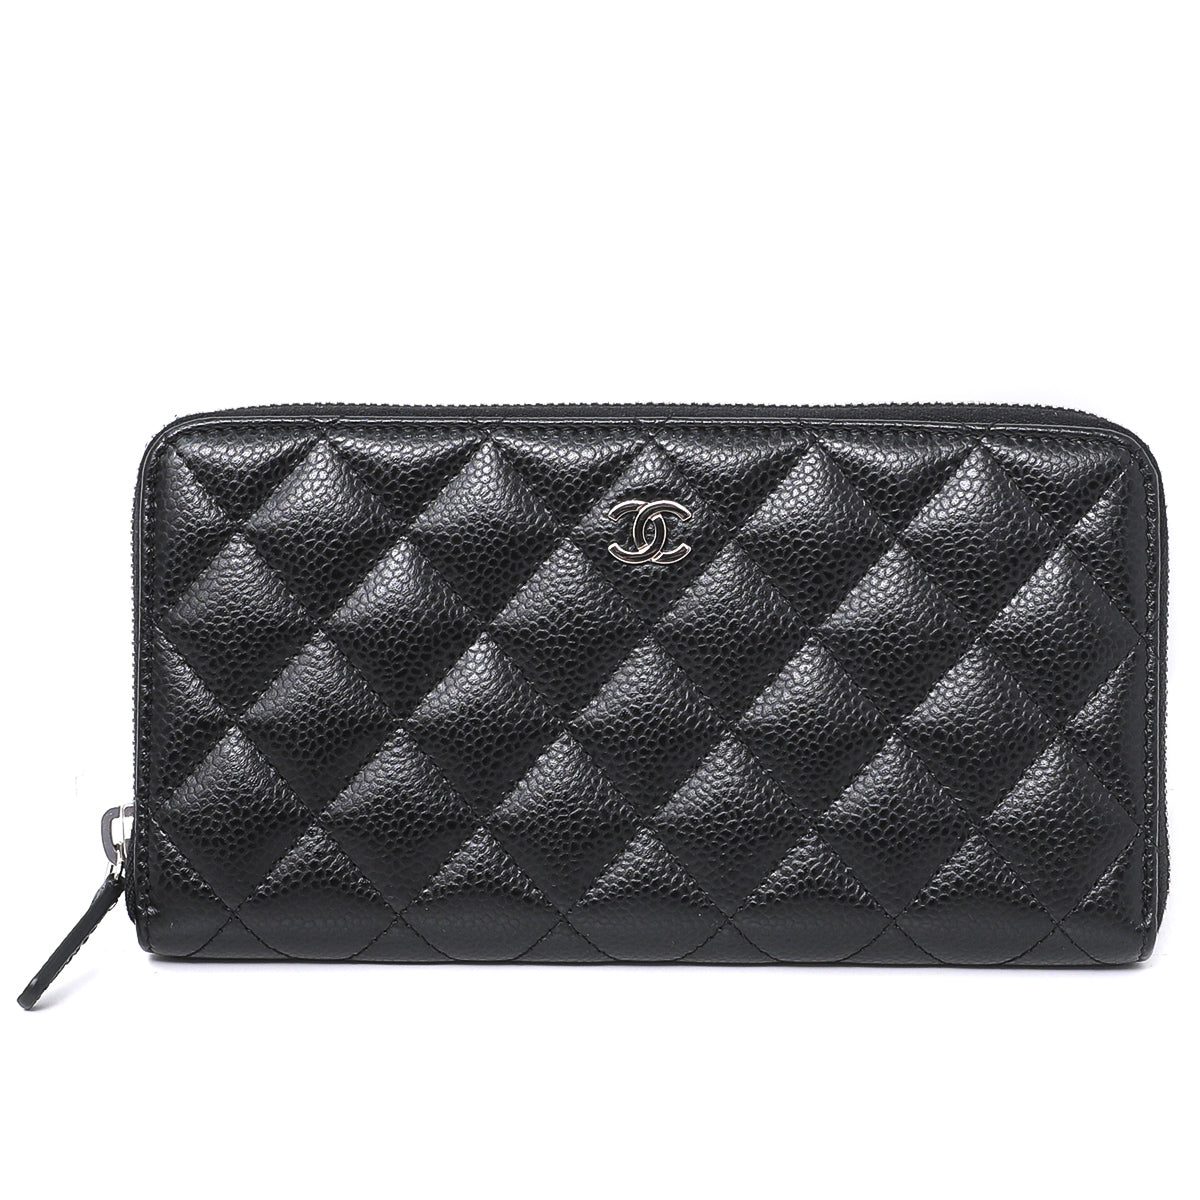 Chanel Black Gusset Zippy Wallet